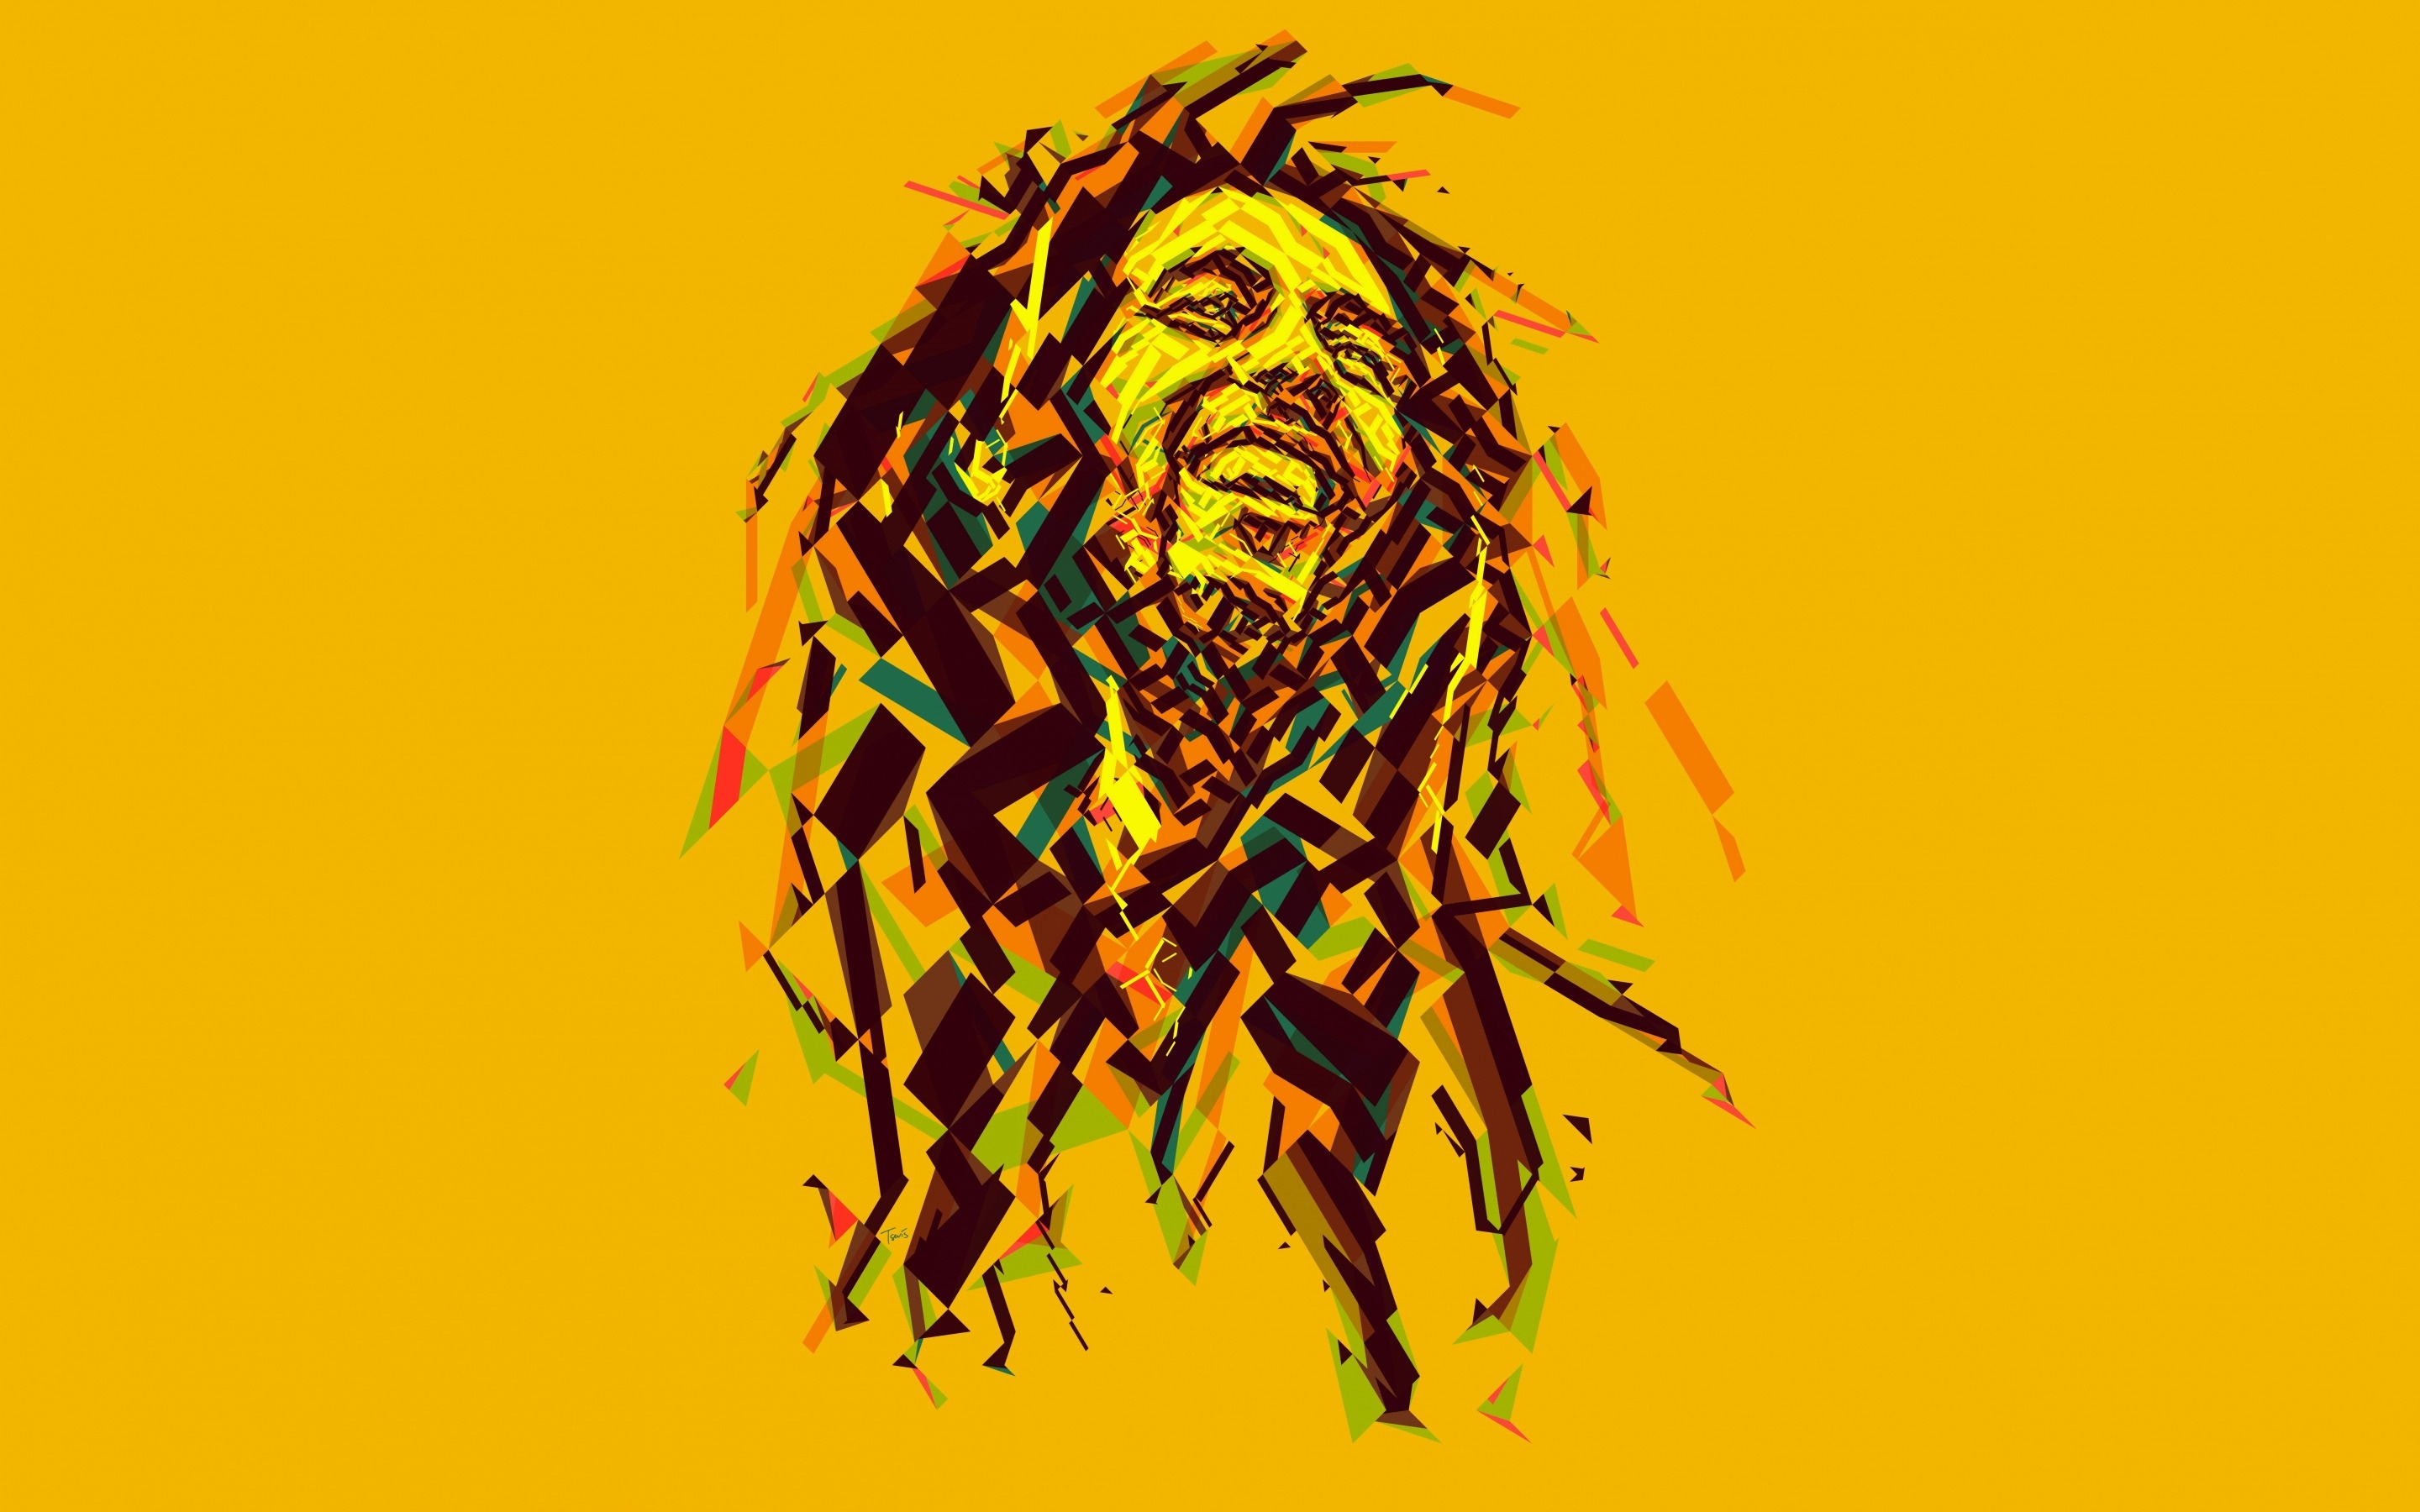 HD wallpaper, Bob Marley, Low Poly Design, 2880X1800 Hd Desktop, Desktop Hd Bob Marley Wallpaper Photo, Artistic Masterpiece, Jamaican Musician